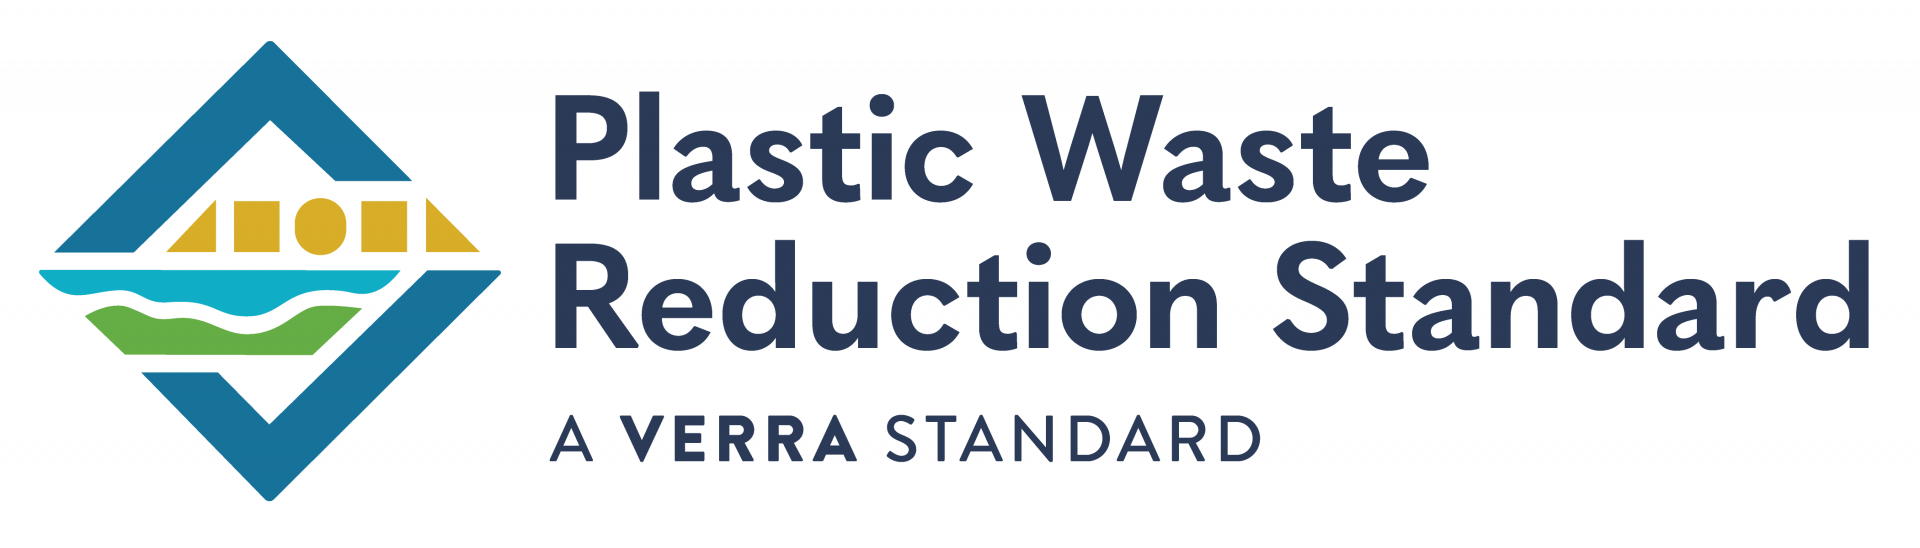 Plastic Waste Reduction Program - Plastic Project Validation and Verification